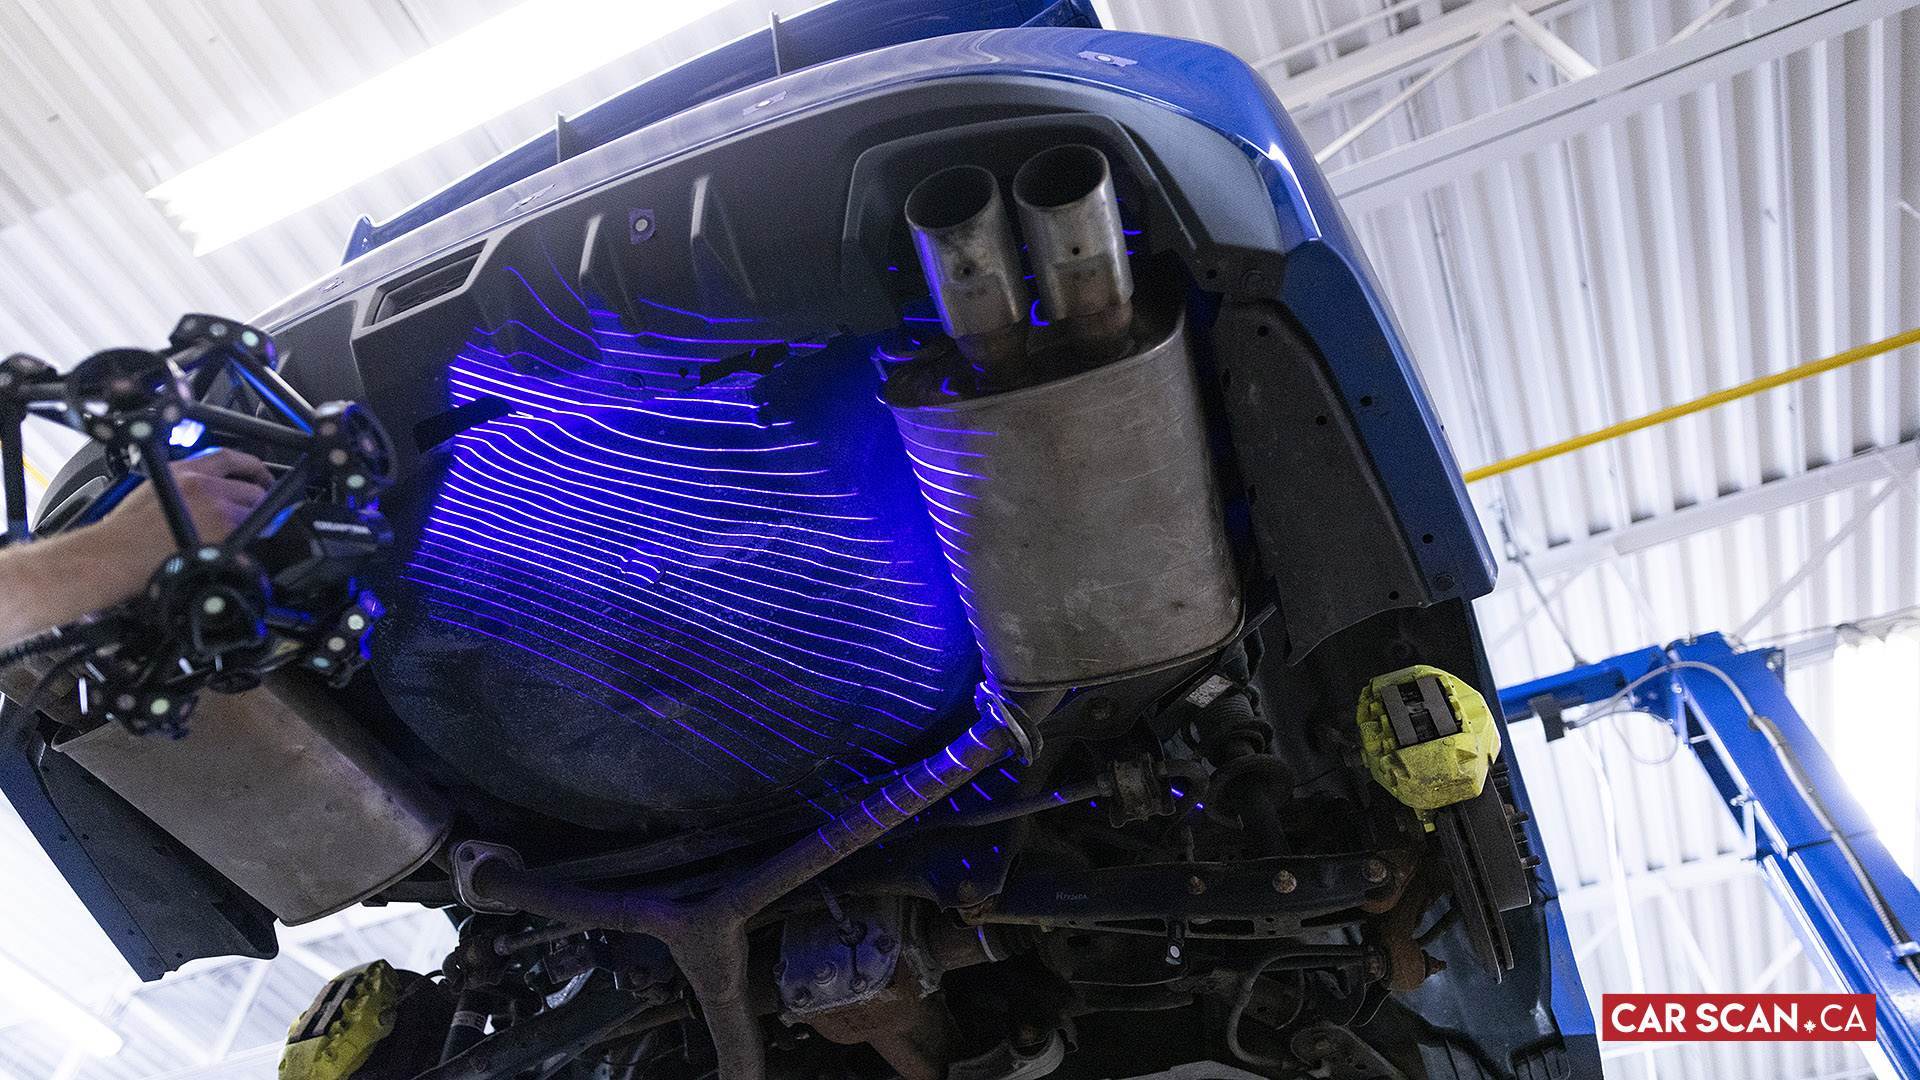 CarScan.ca Laser Scanning Subaru WRX STI Underbody Exhaust